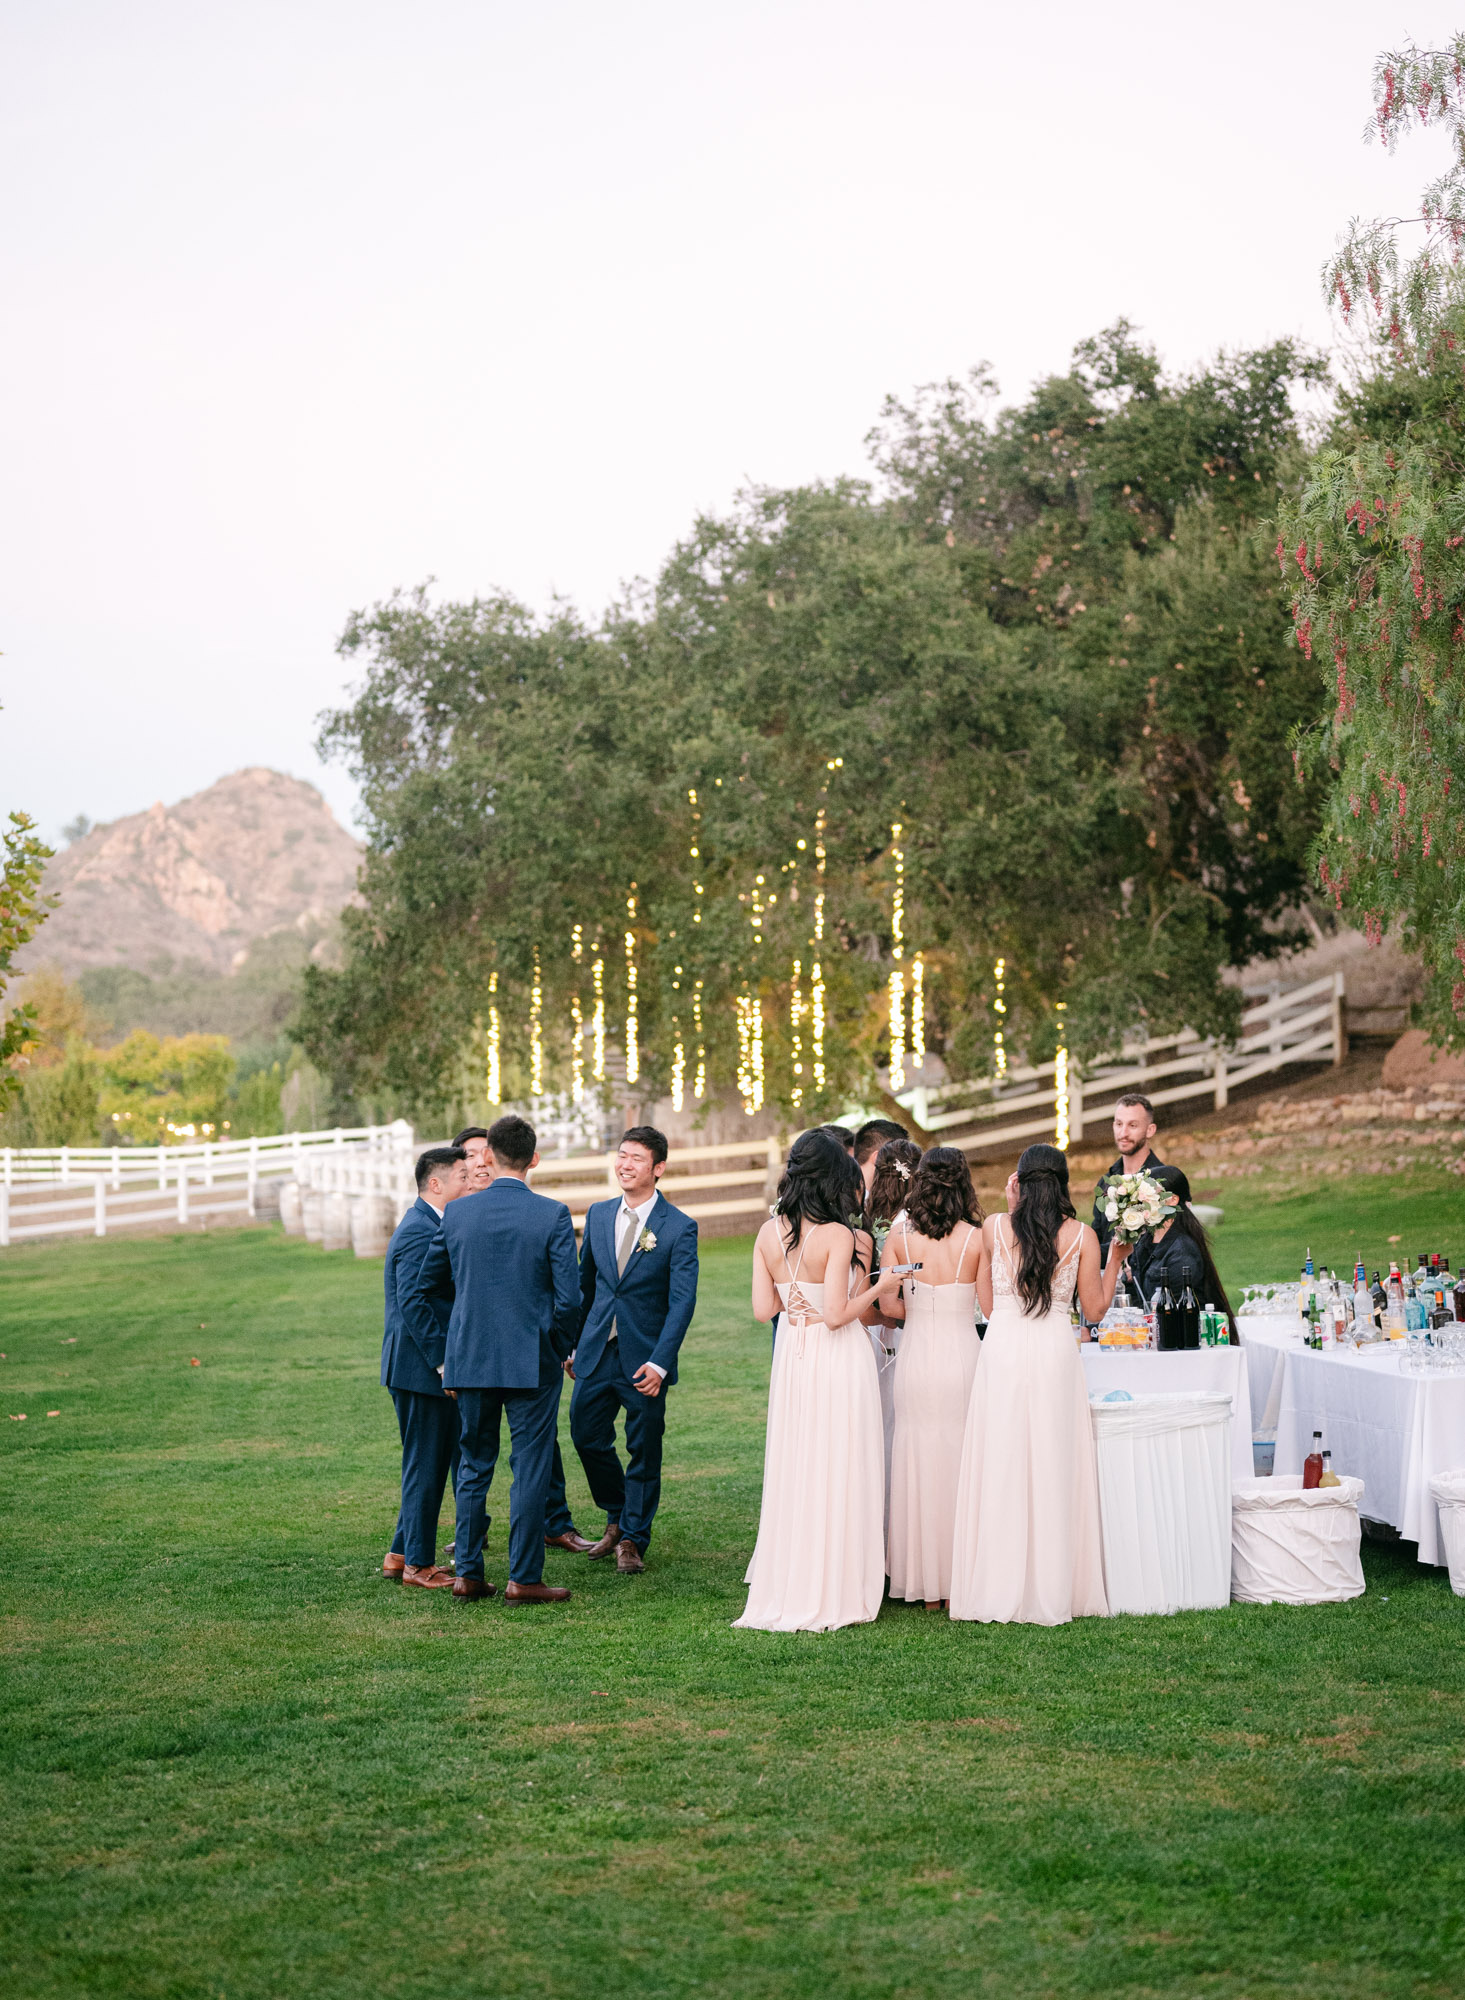 Reception at Saddlerock ranch wedding in malibu, california